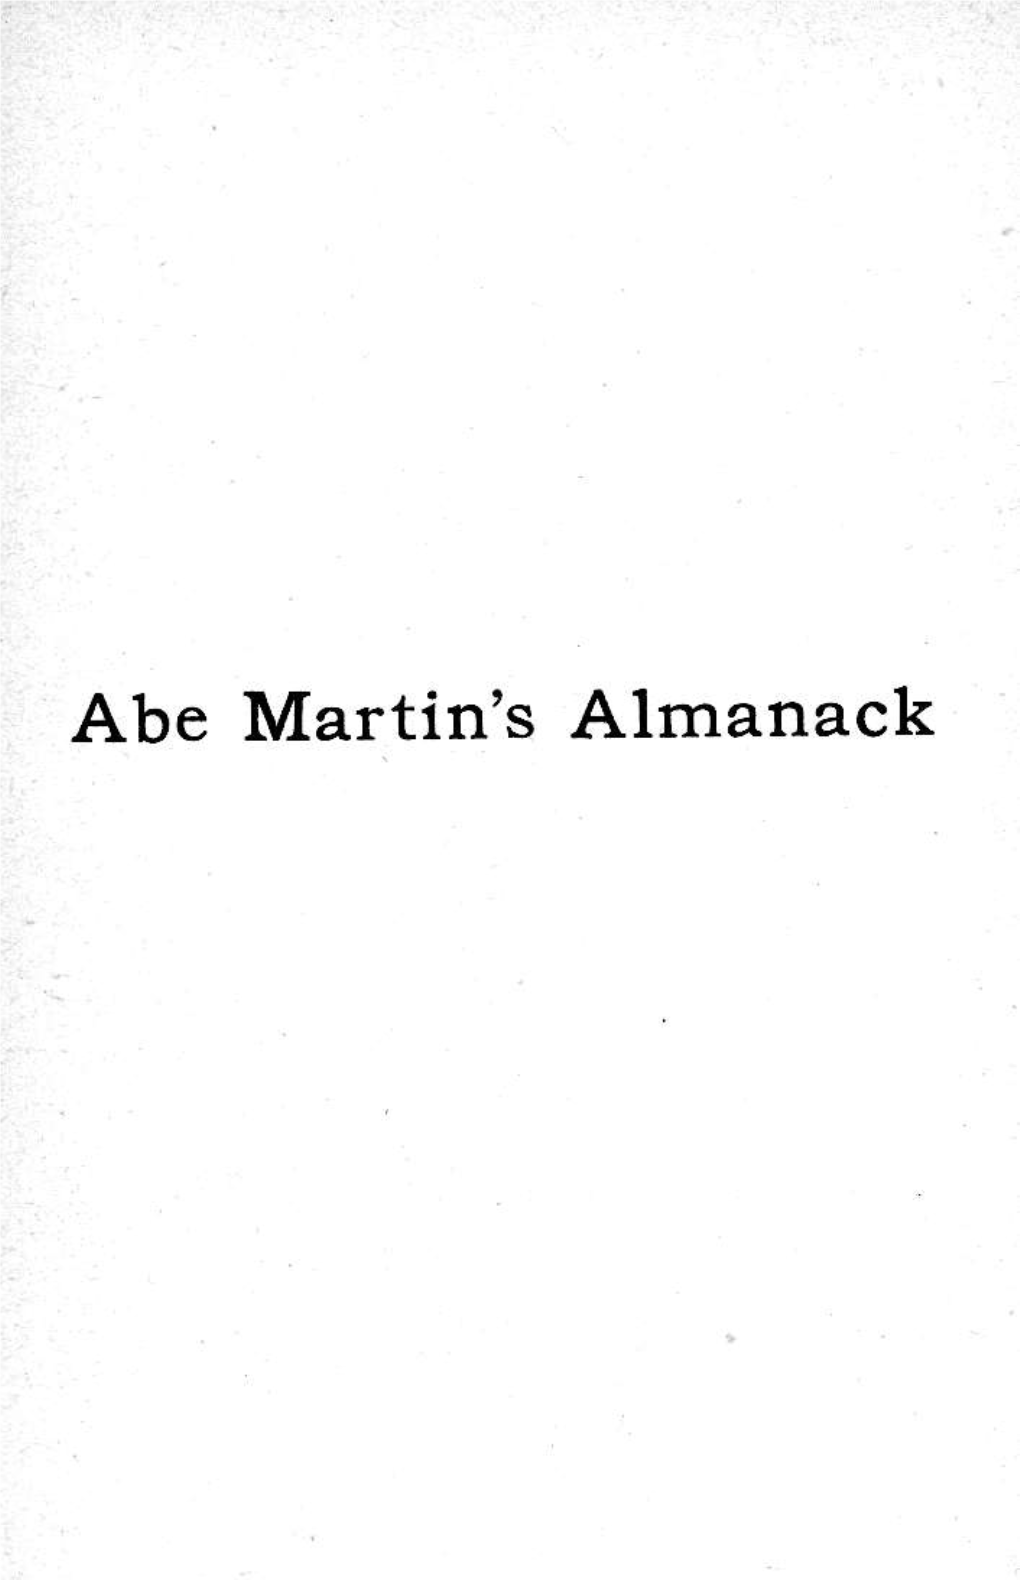 Abe Martin's Almanack Title Copyrighted Abe Martin's Brown County Almanack by Kin Hubbard